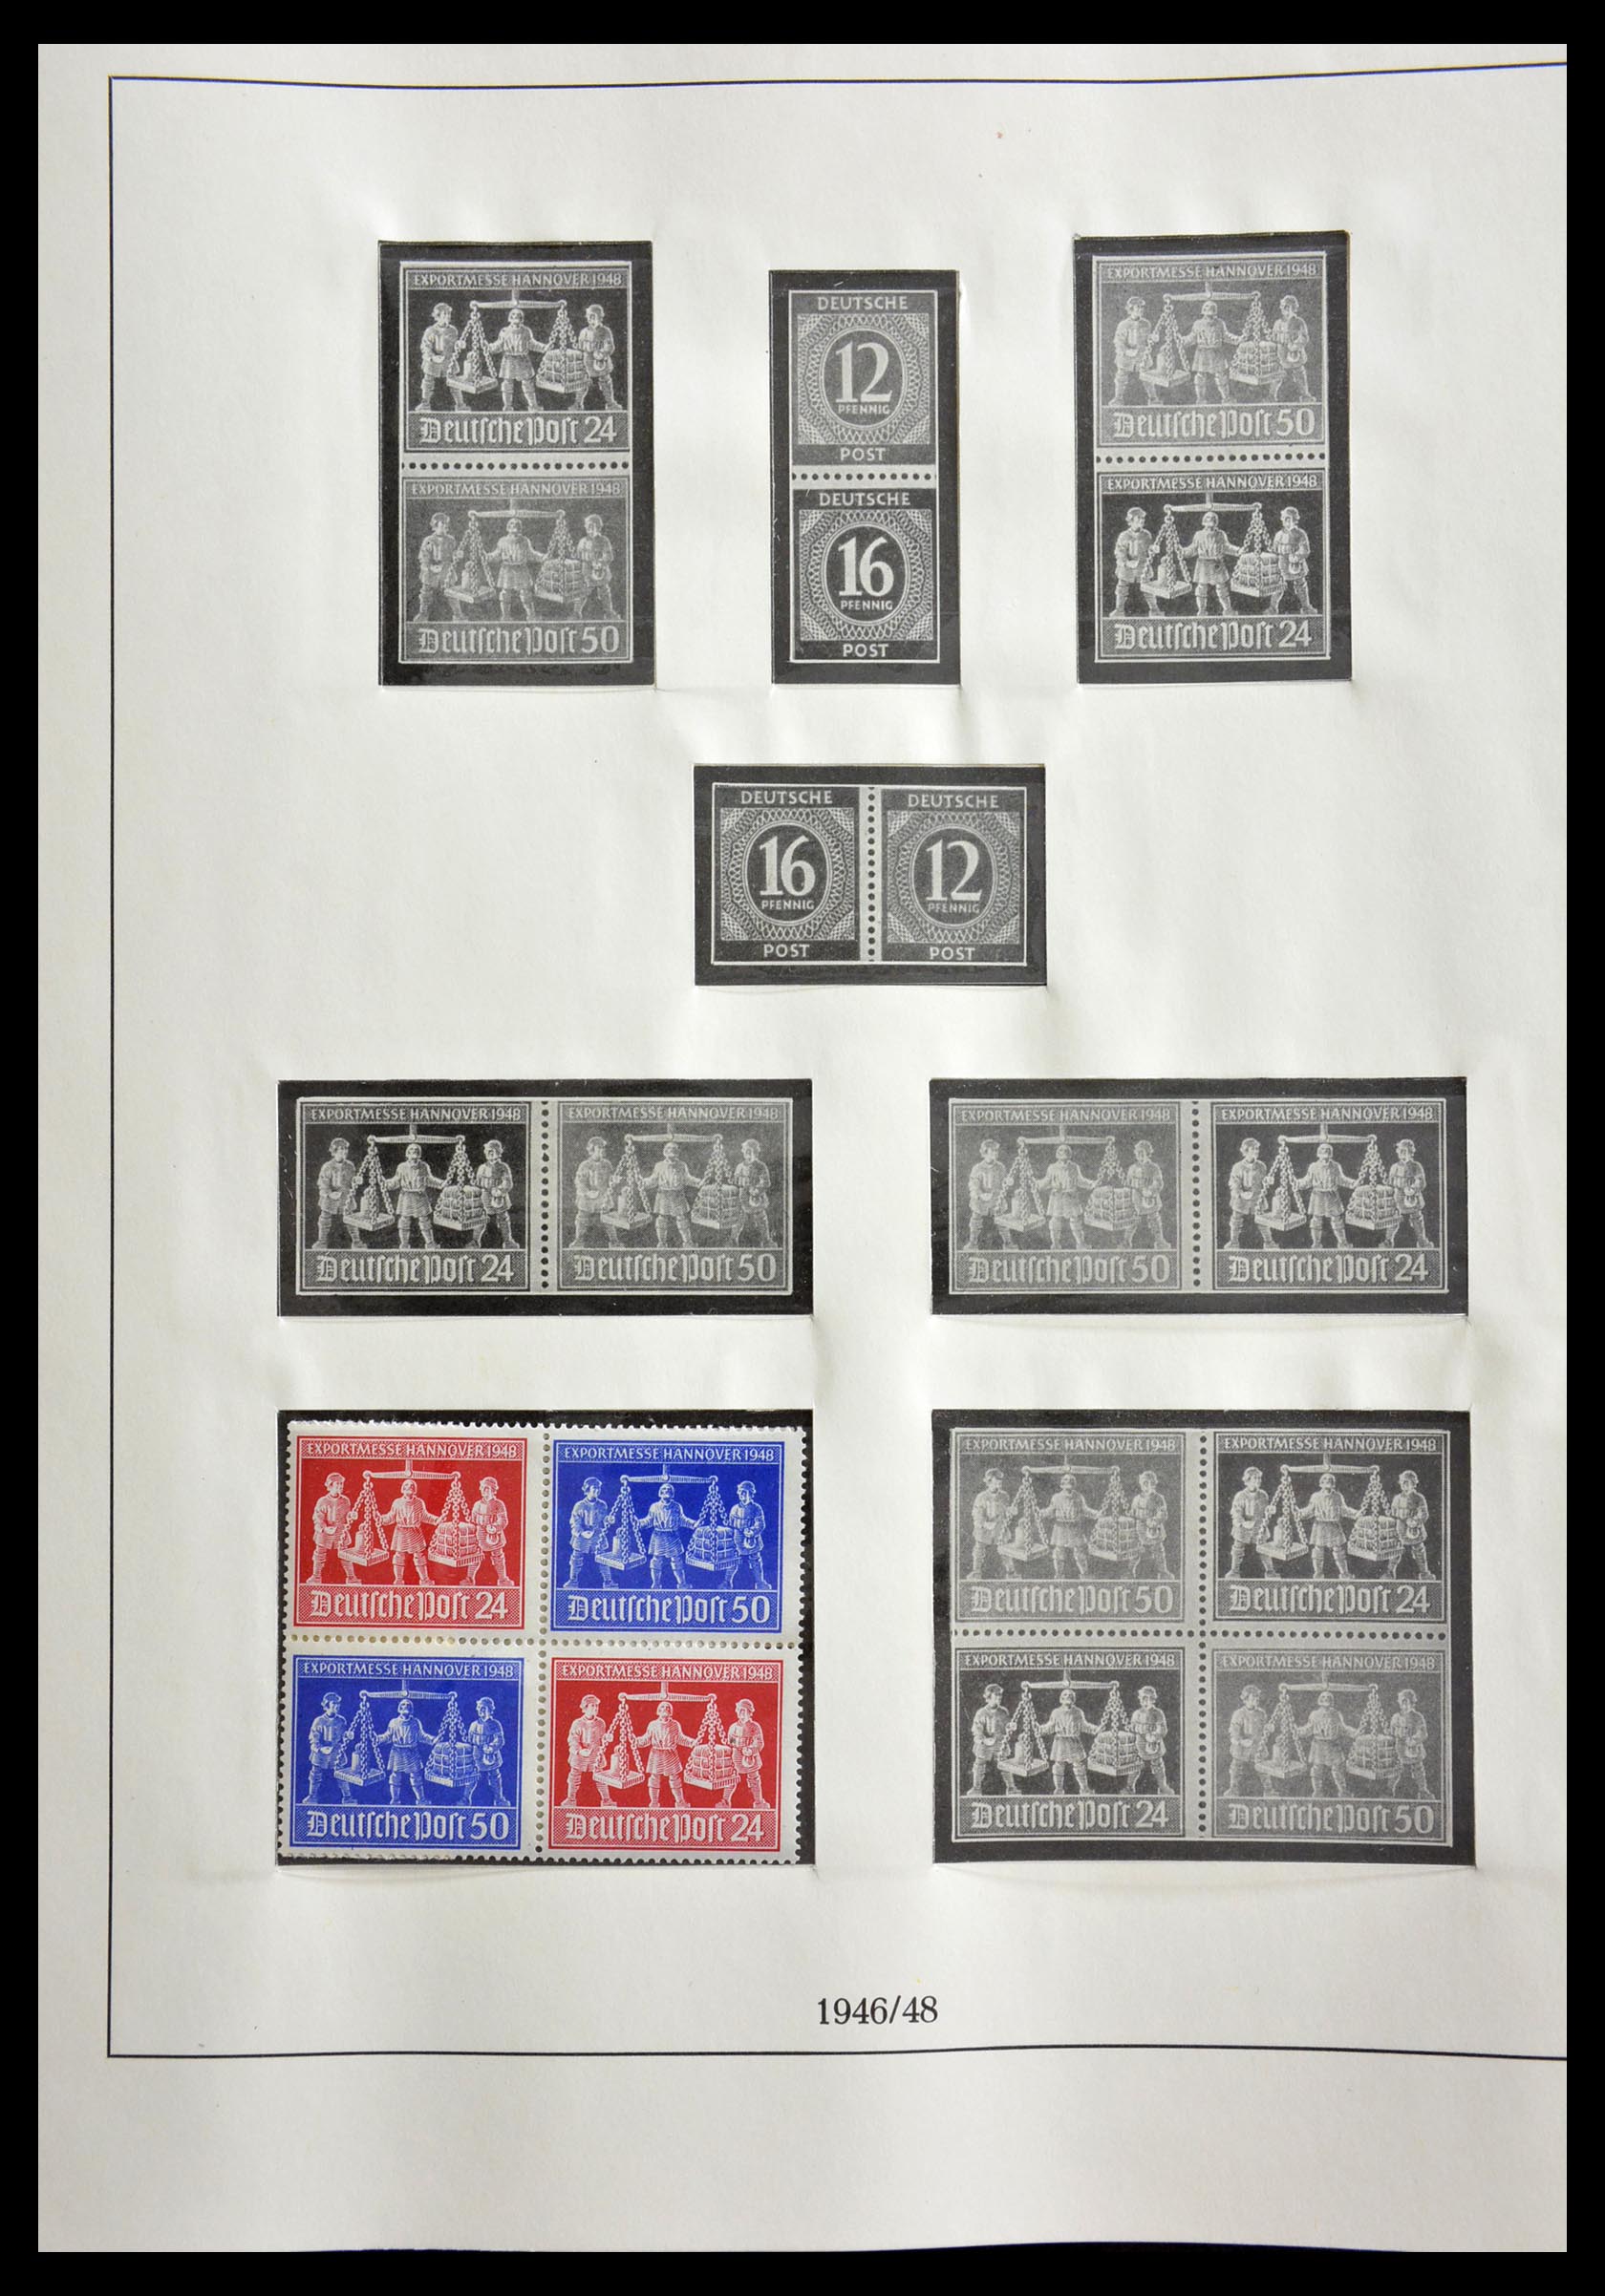 29259 005 - 29259 Bundespost and Zones 1945-1970.